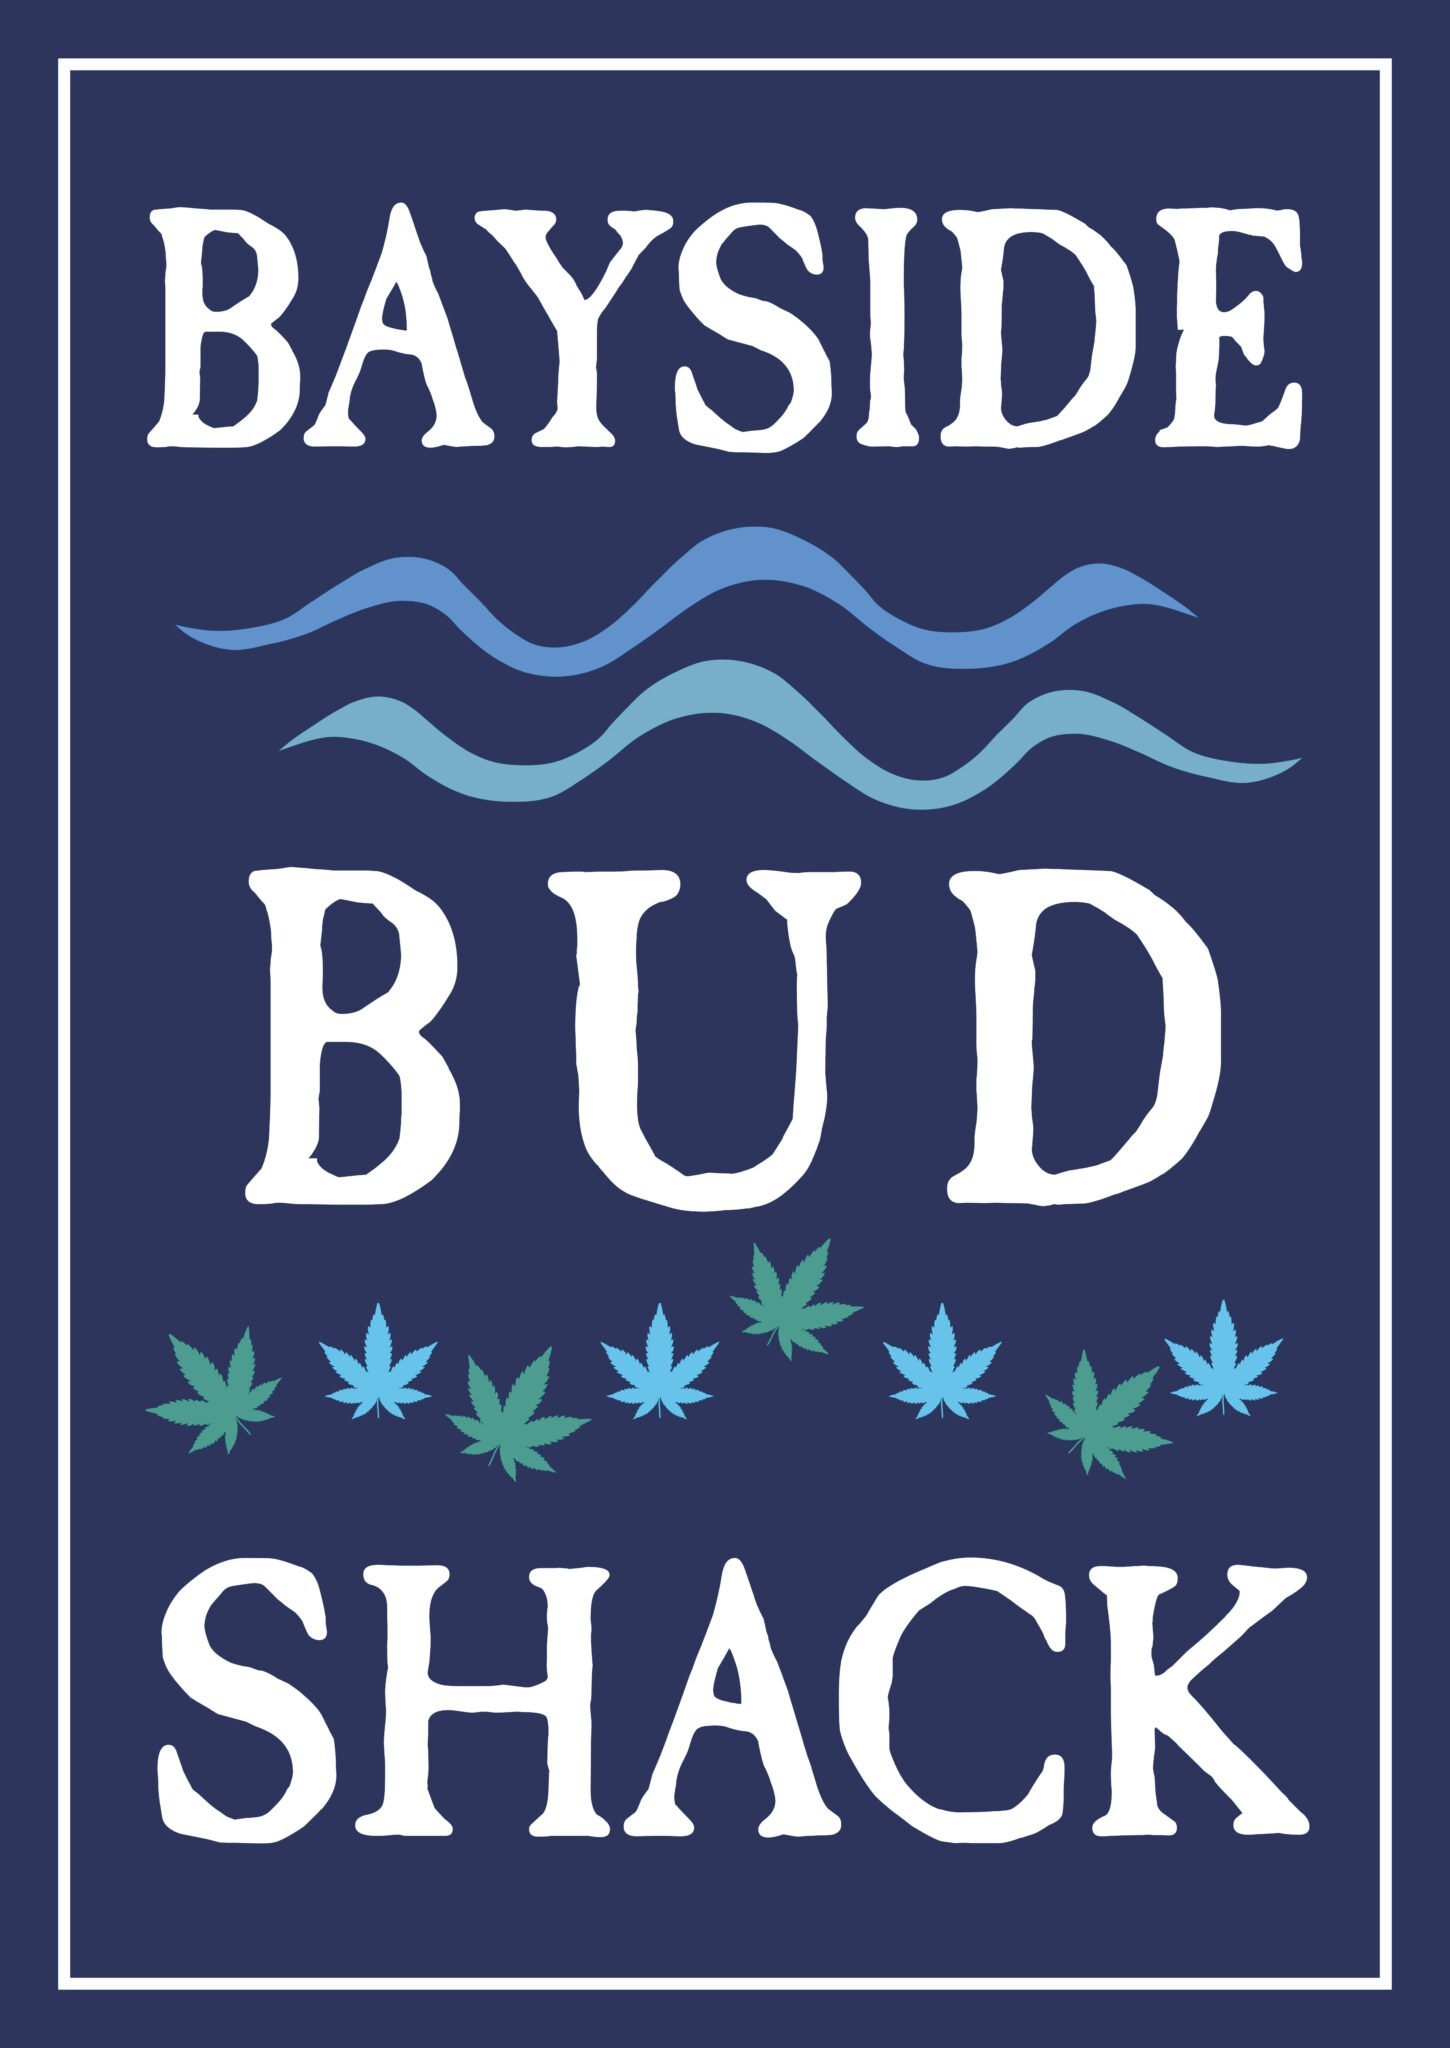 Bayside Budshack (Copy)